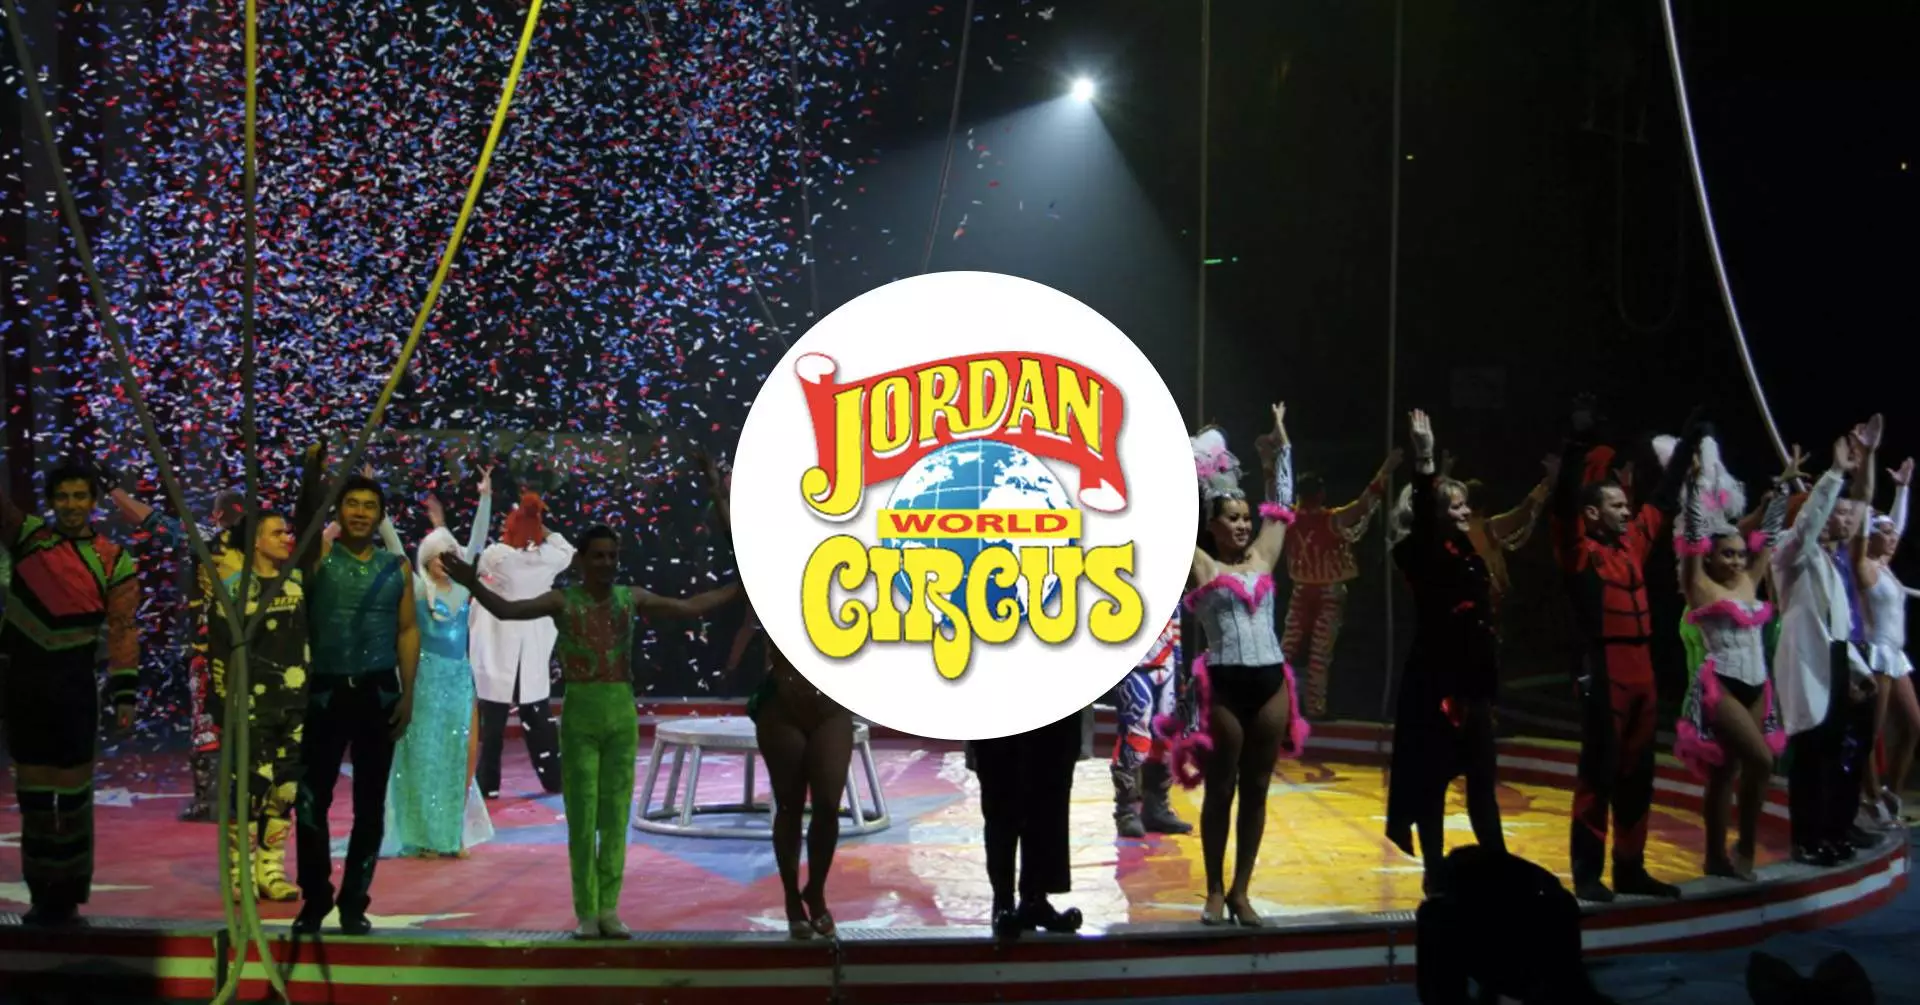 Tour Dates The Jordan World Circus 1 Choice for Family Entertainment